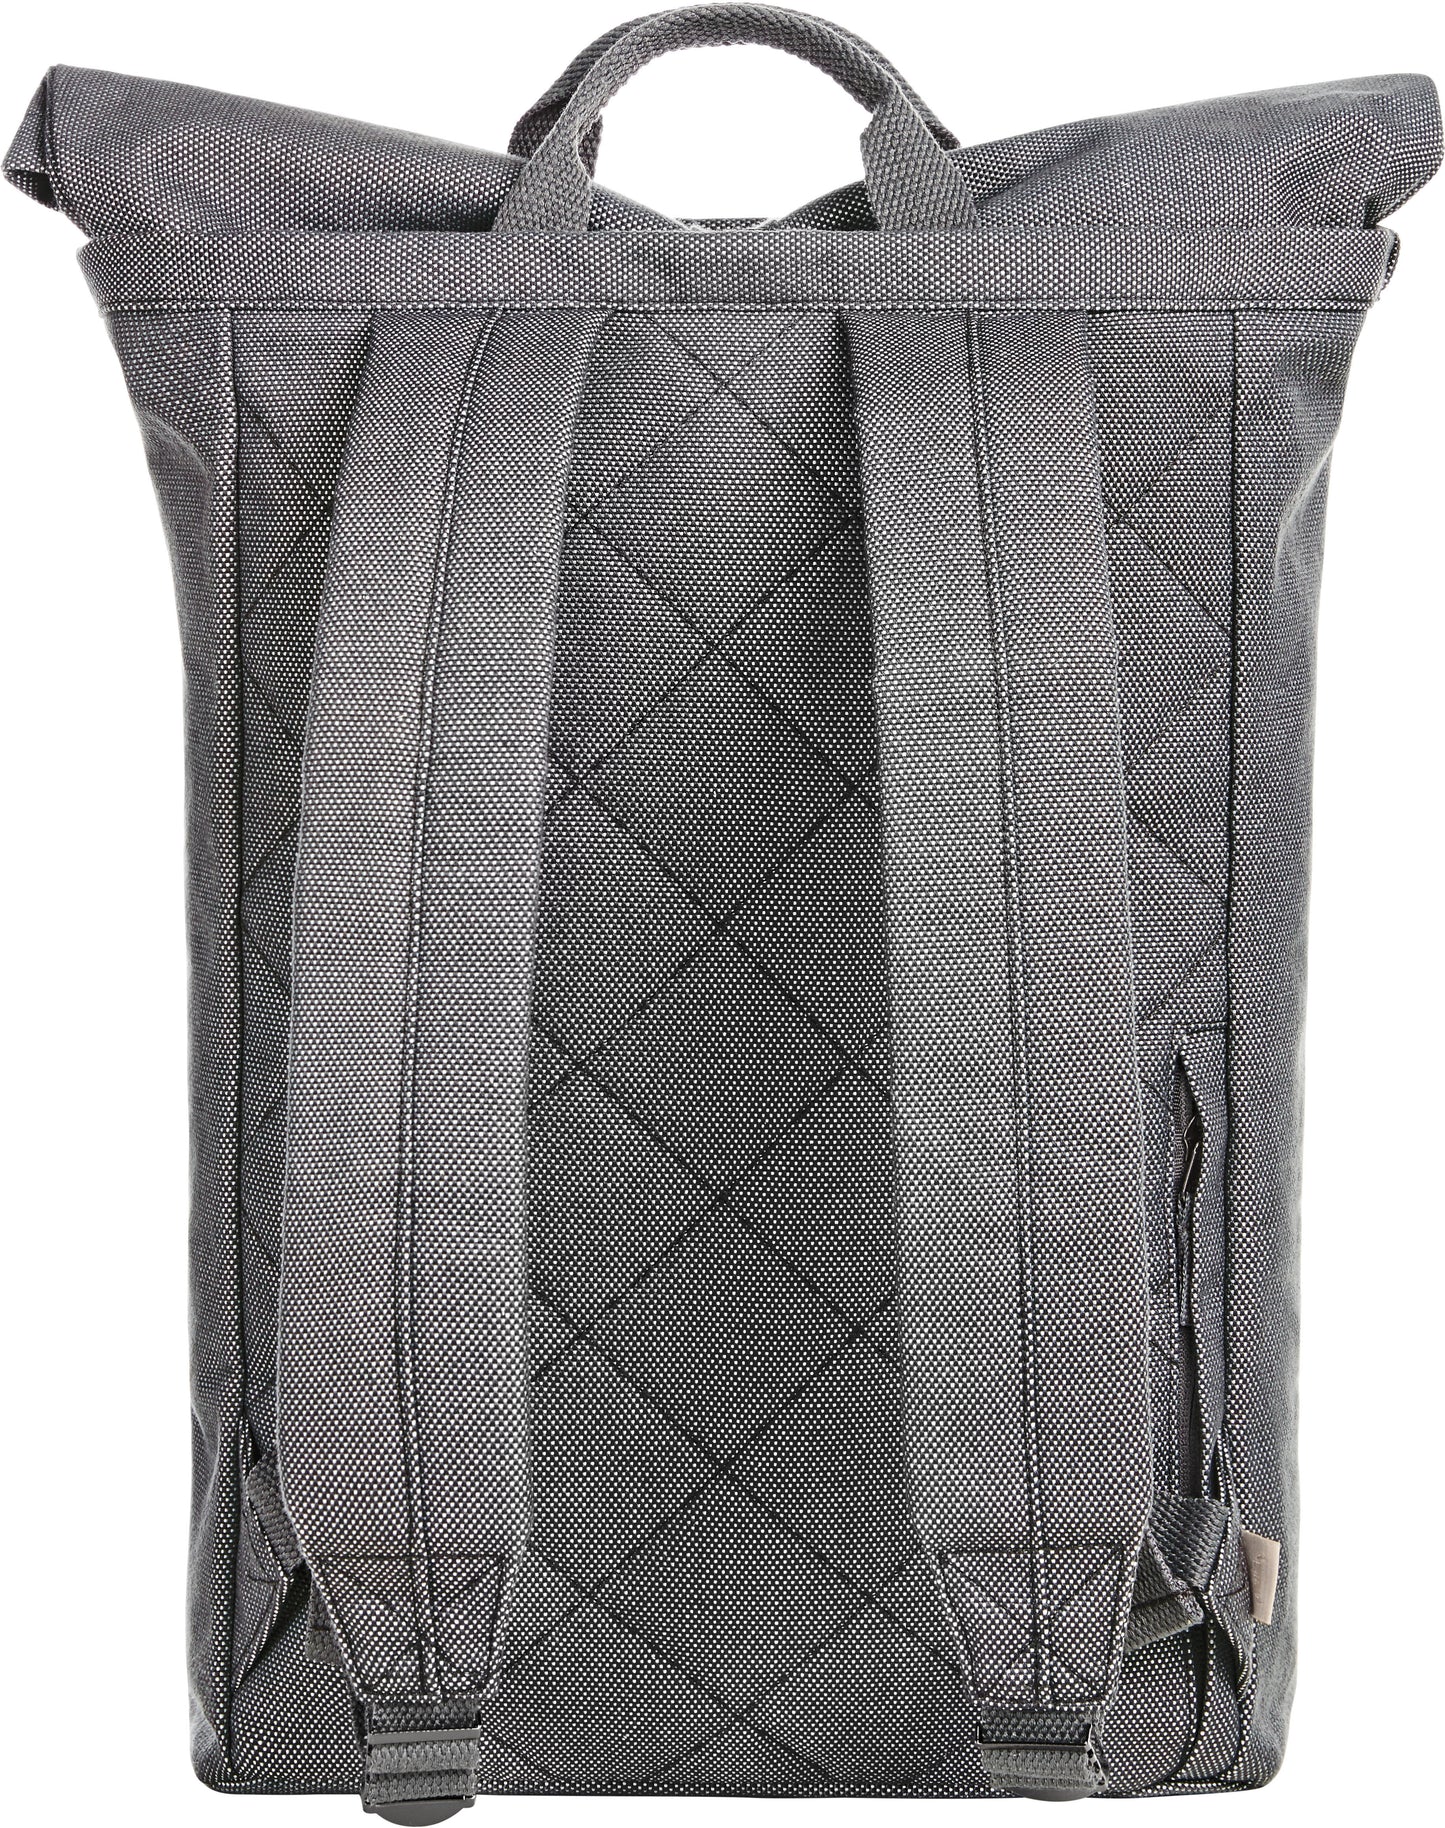 Rucksack aus Baumwolle/Polyester, PVC FREI